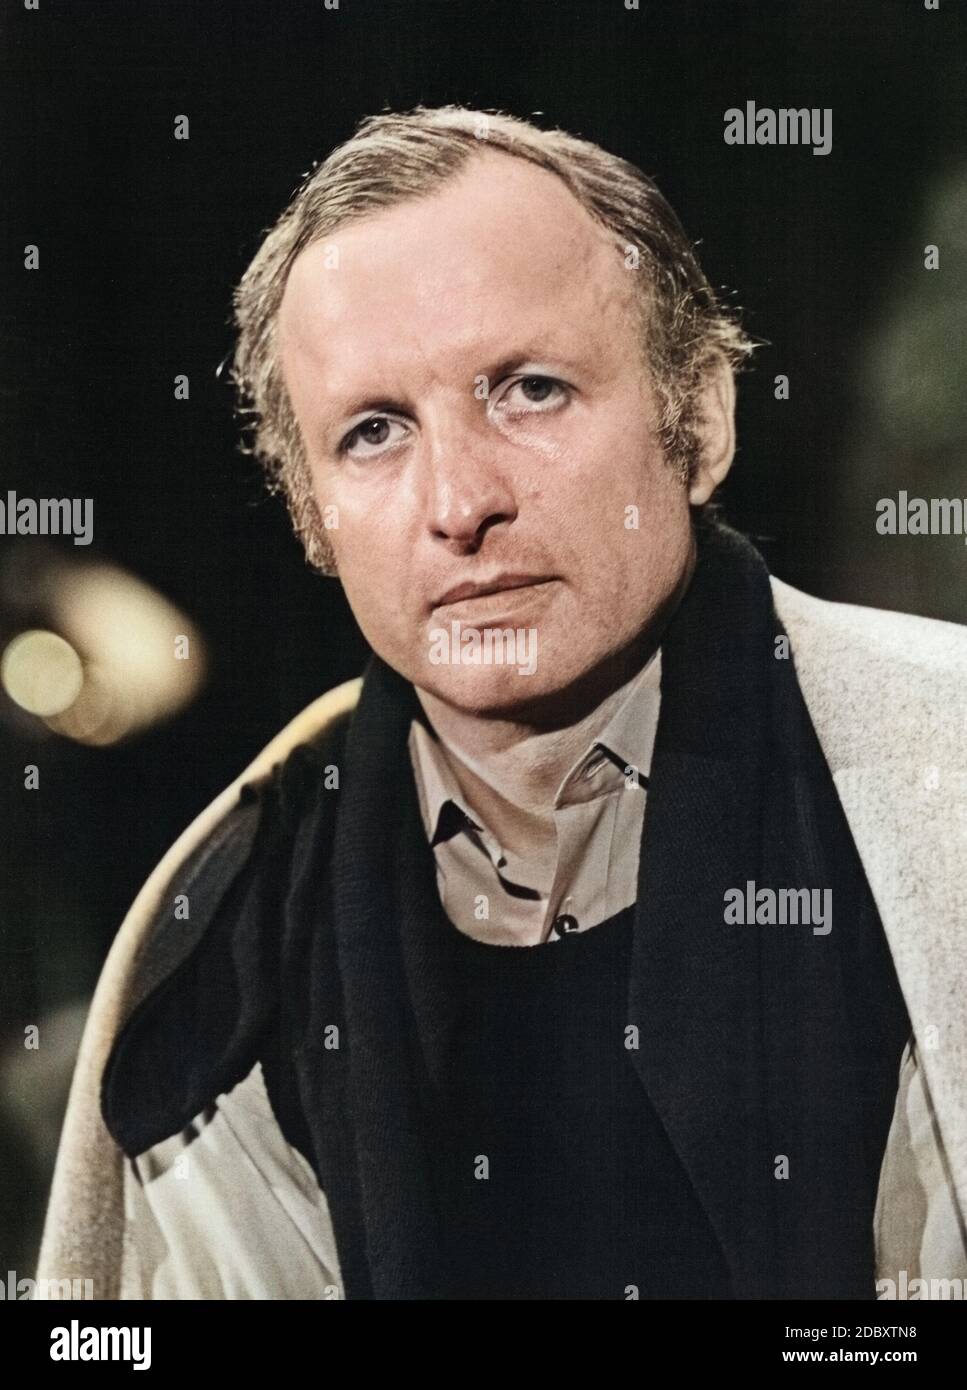 Gerd Albrecht, deutscher Dirigent, Deutschland Ca. 1975. Deutschen Dirigenten Gerd Albrecht, Deutschland Ca. 1975. Stockfoto